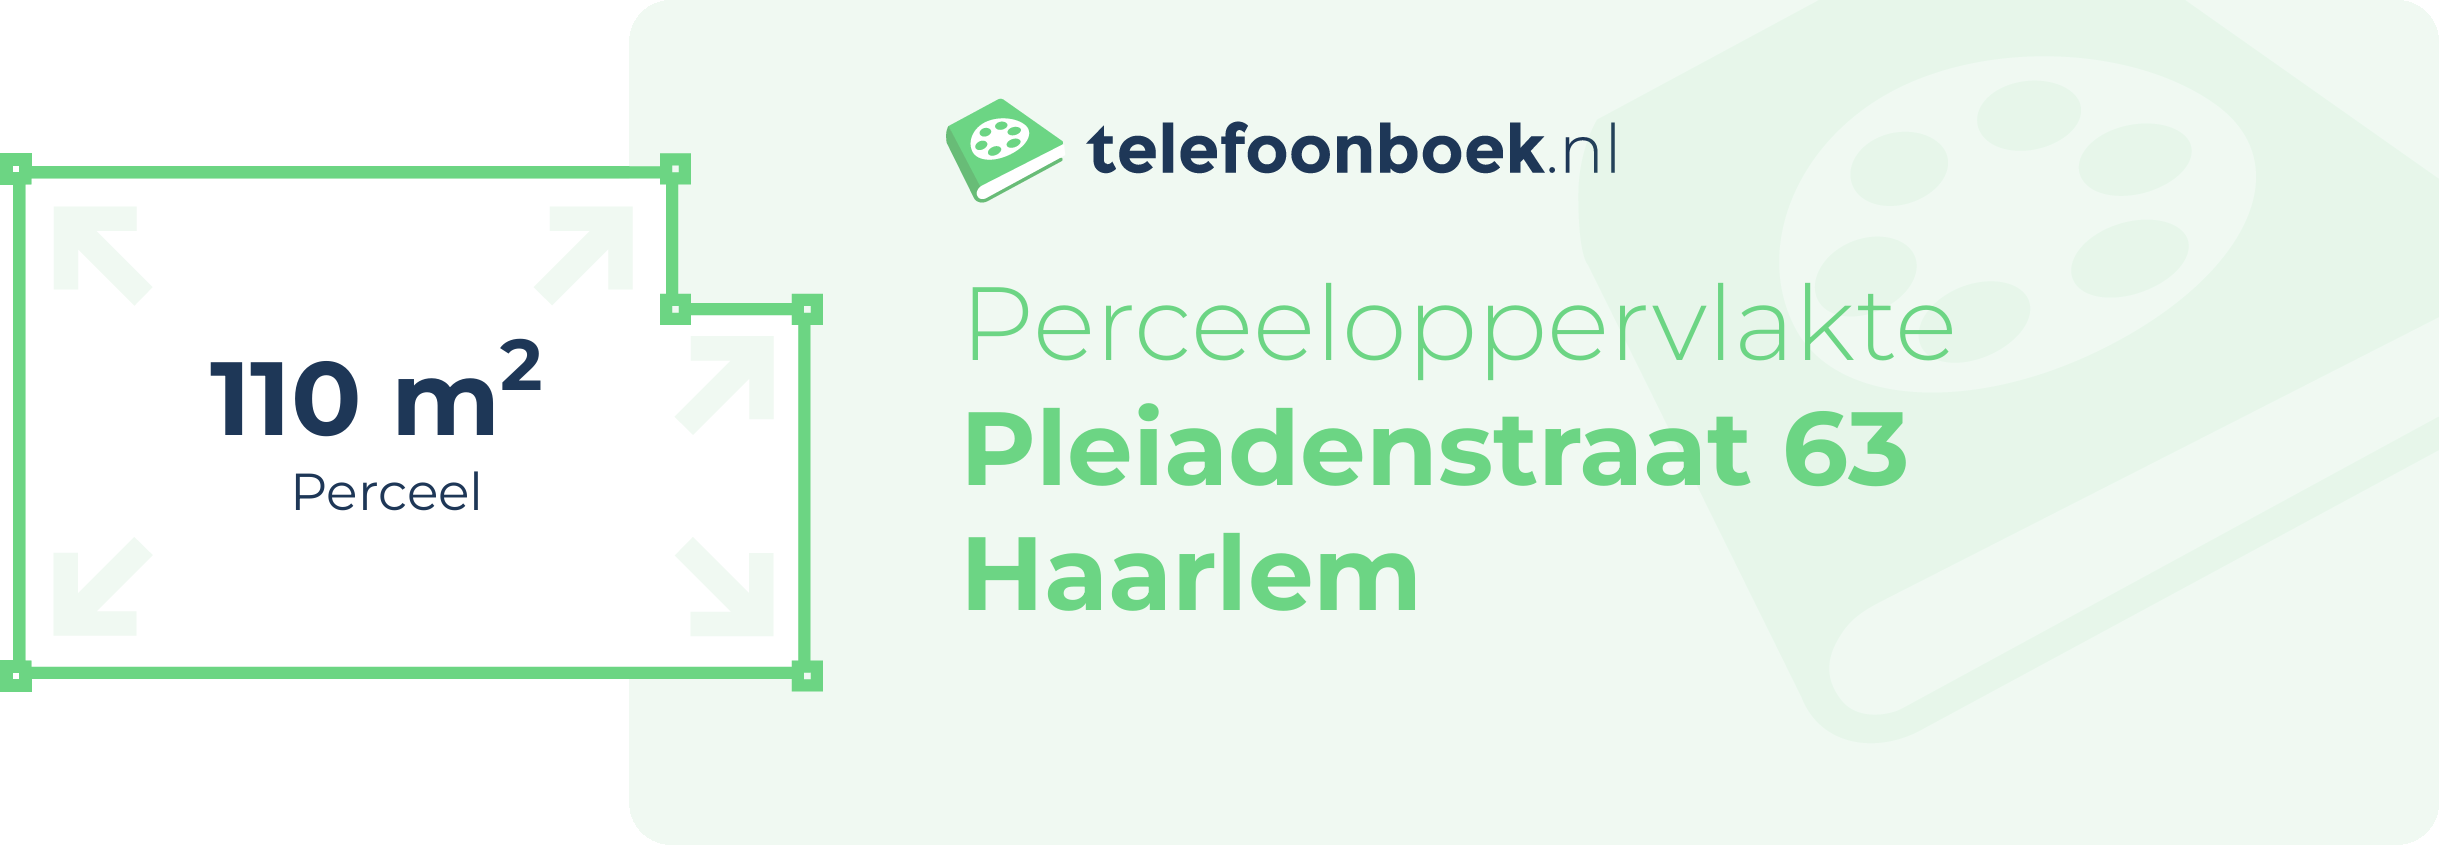 Perceeloppervlakte Pleiadenstraat 63 Haarlem